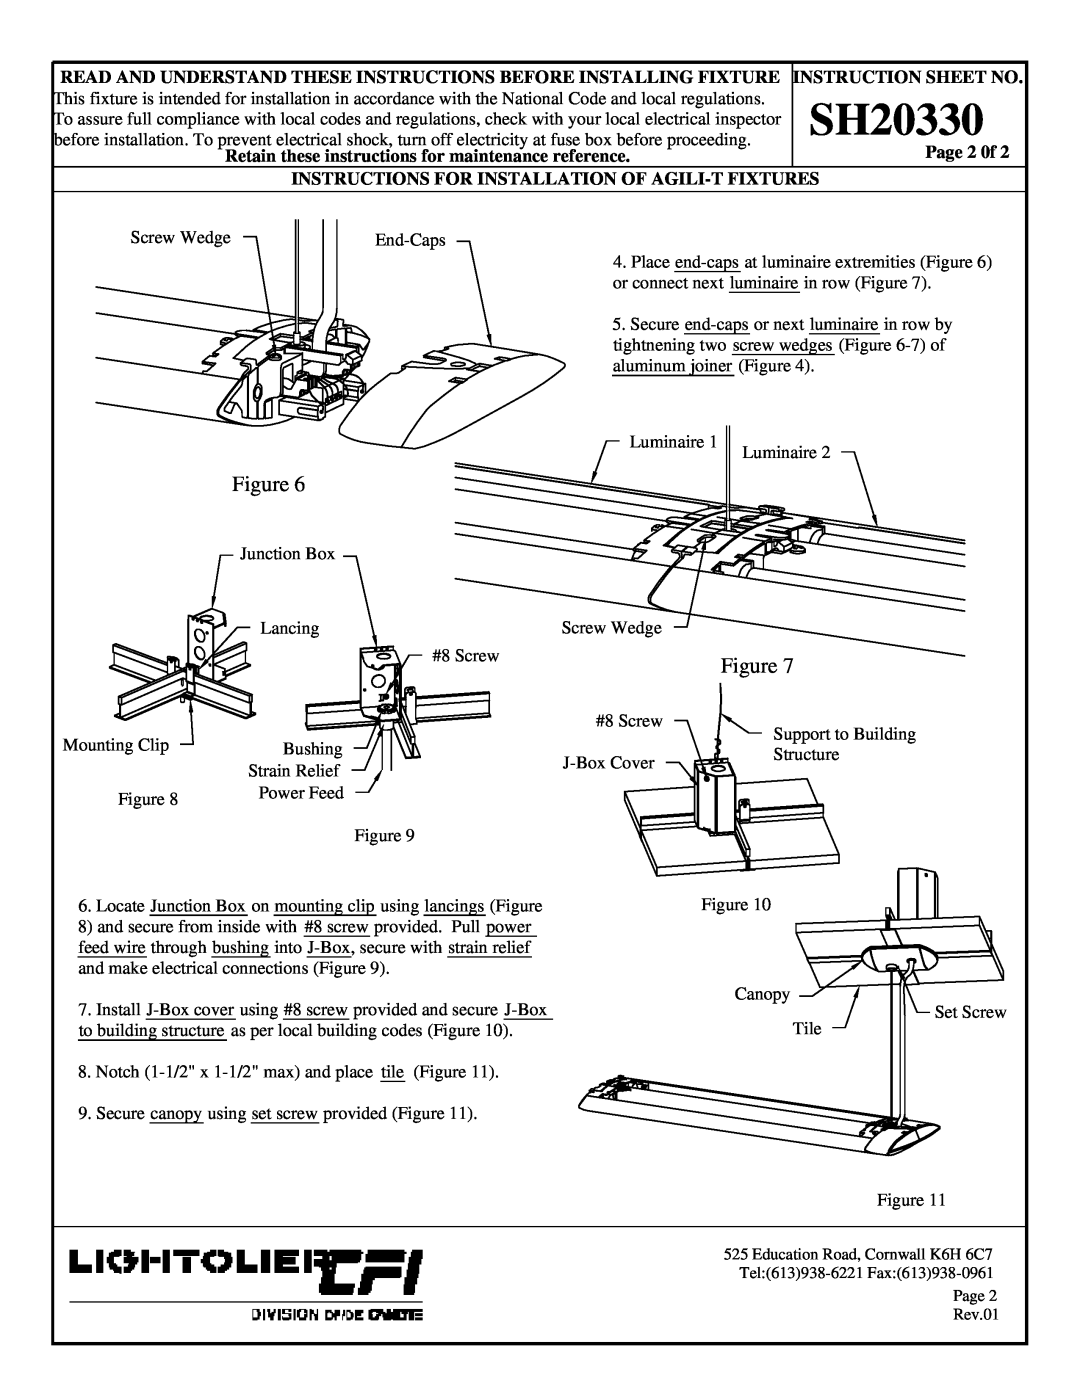 Lightolier SH20330 instruction sheet 